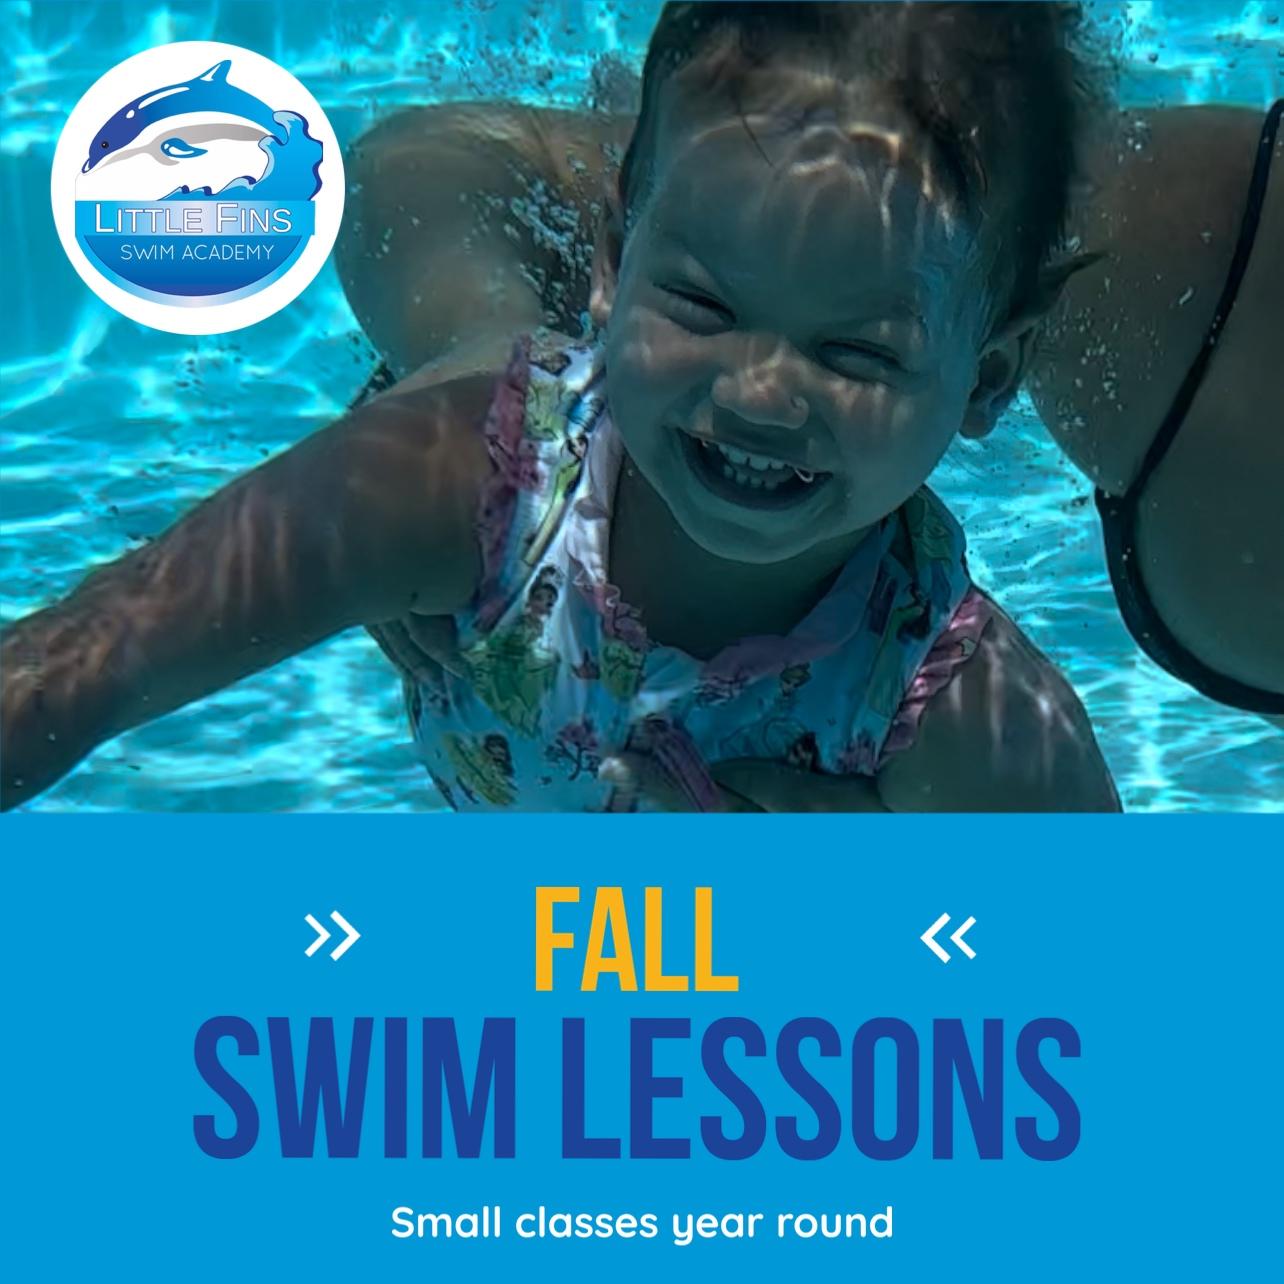 How to Reach Little Fins Swim Academy